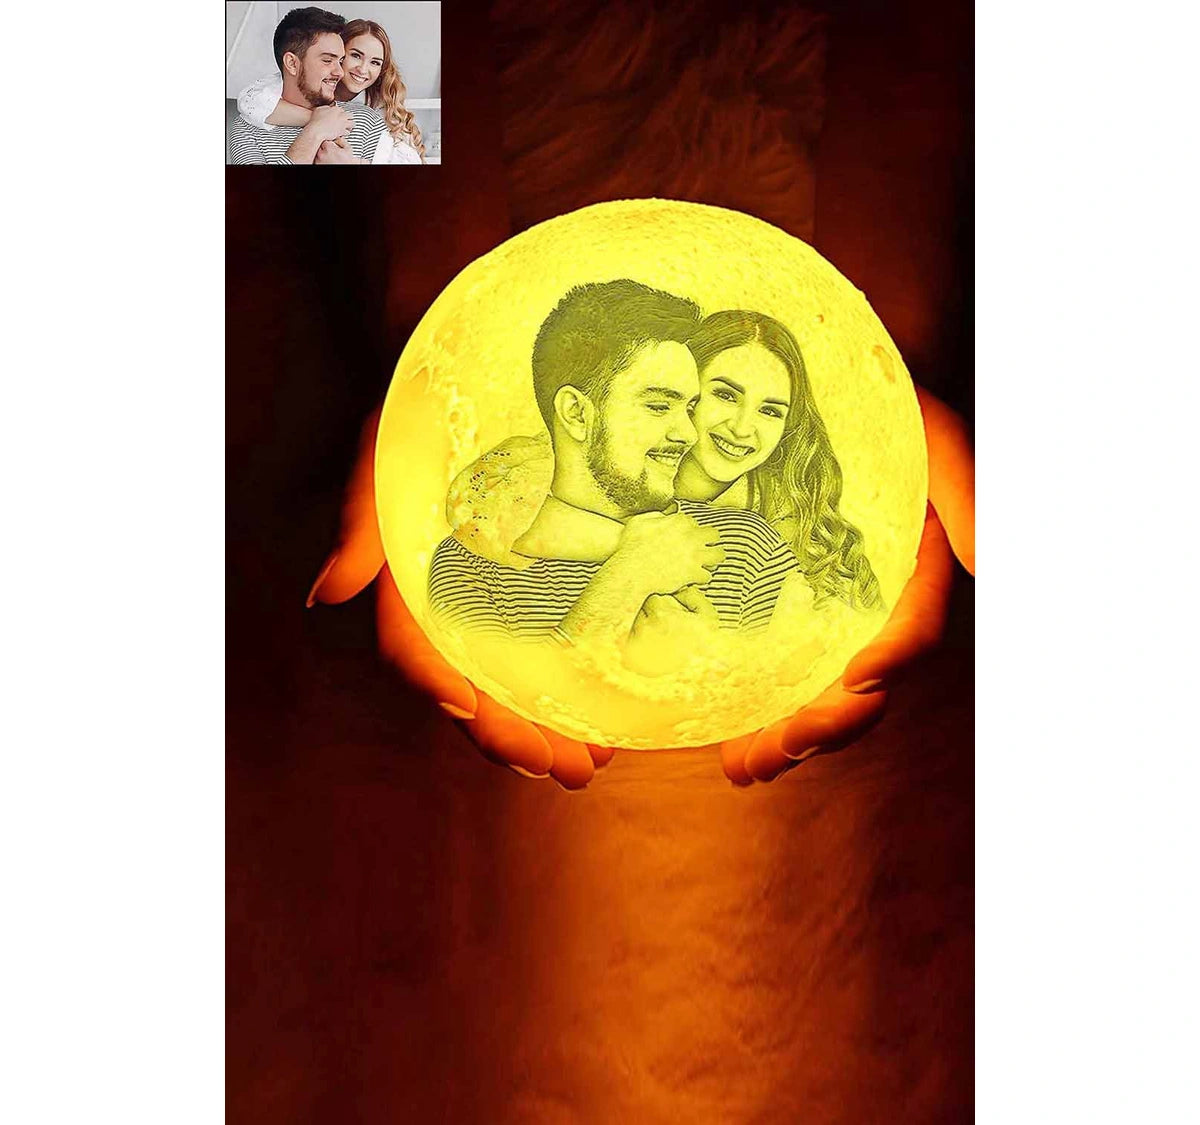 Buy or send Eternal Love Personalised Moon Lamp online with Bakers Wagon